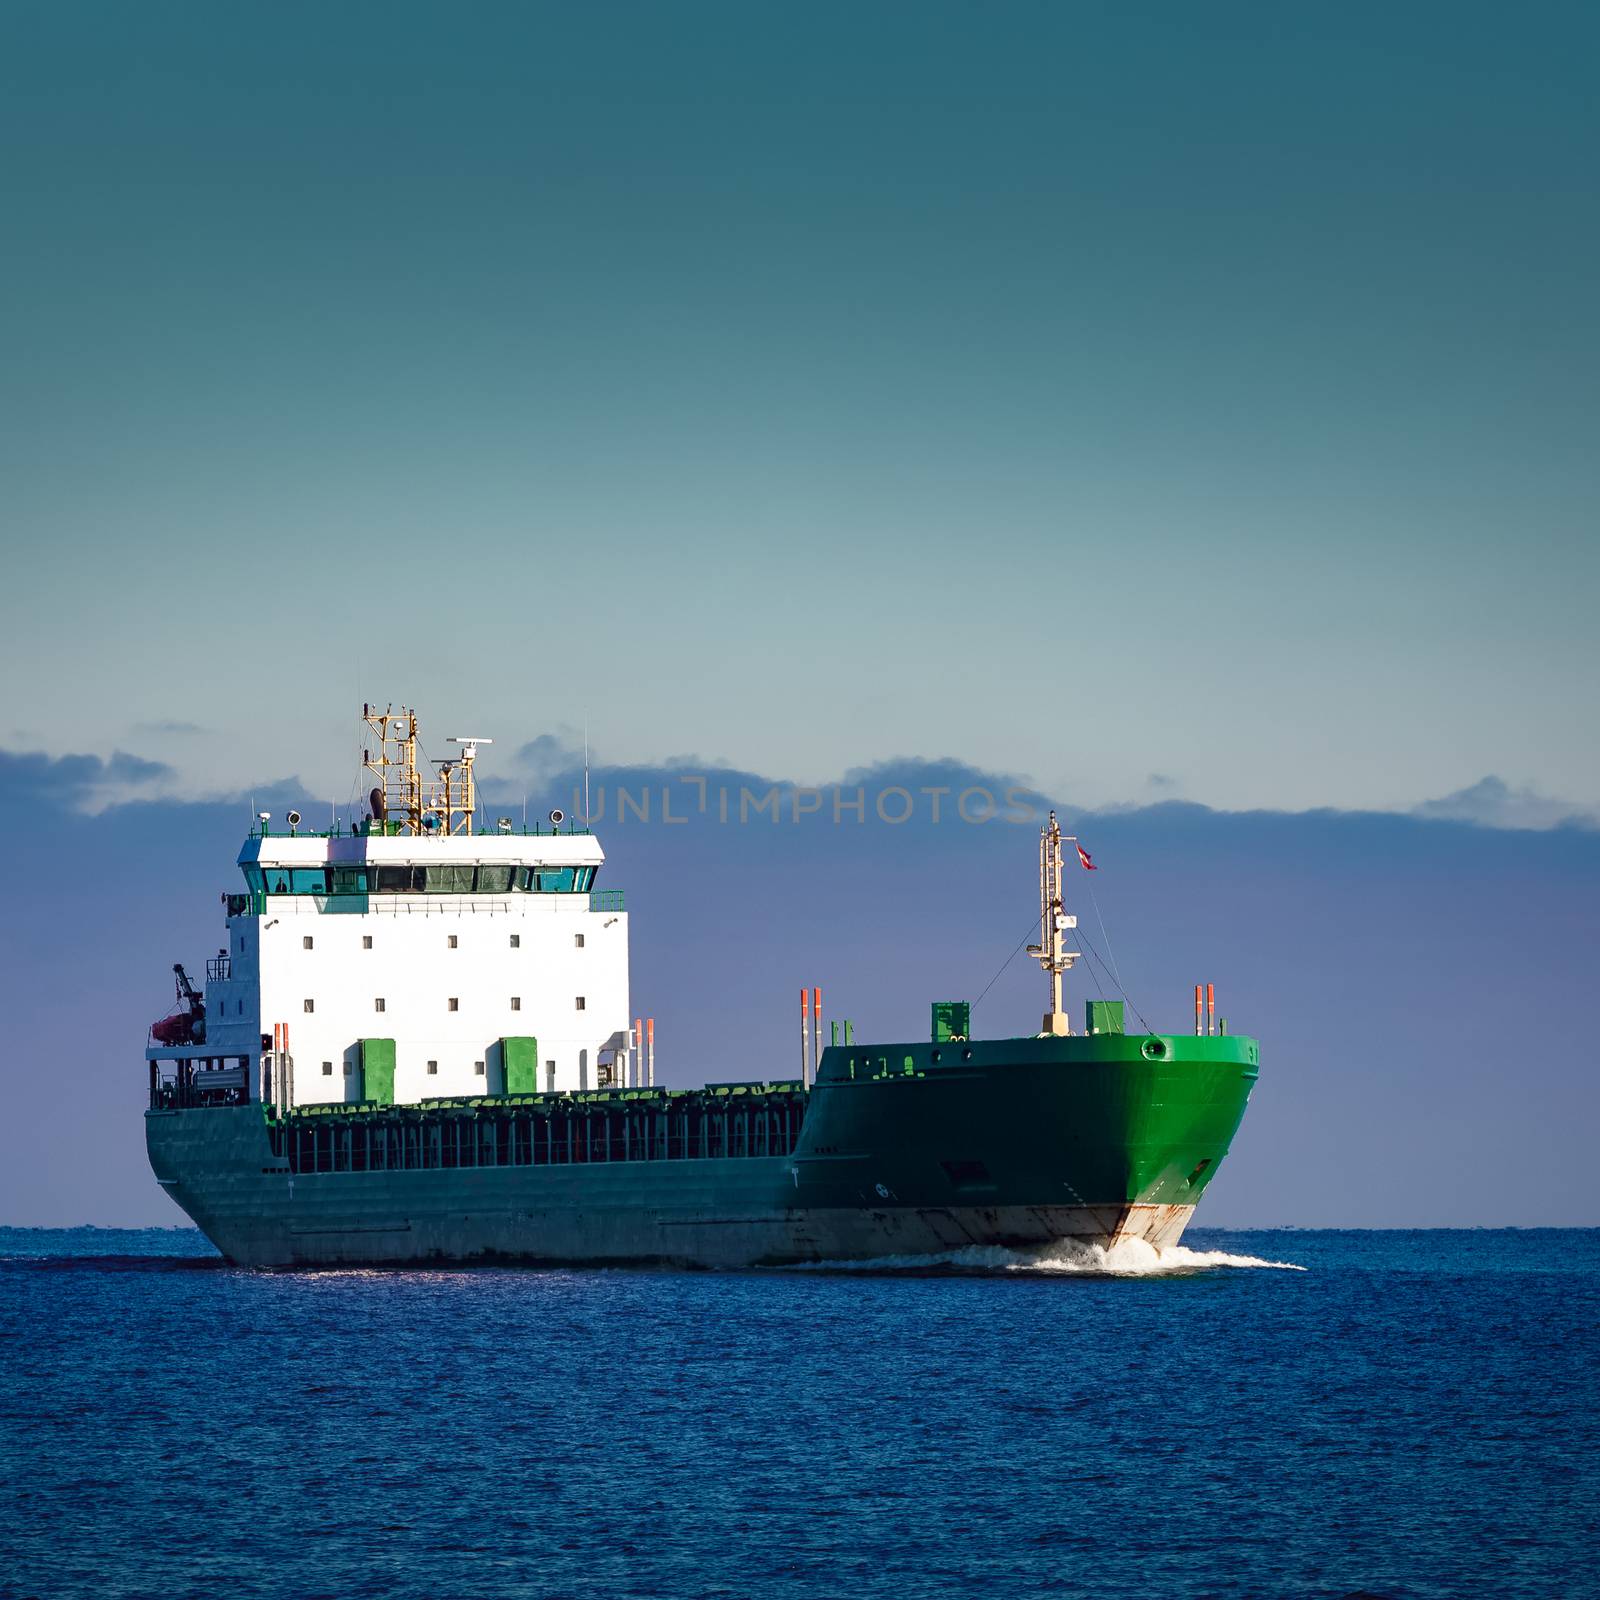 Green cargo ship by sengnsp